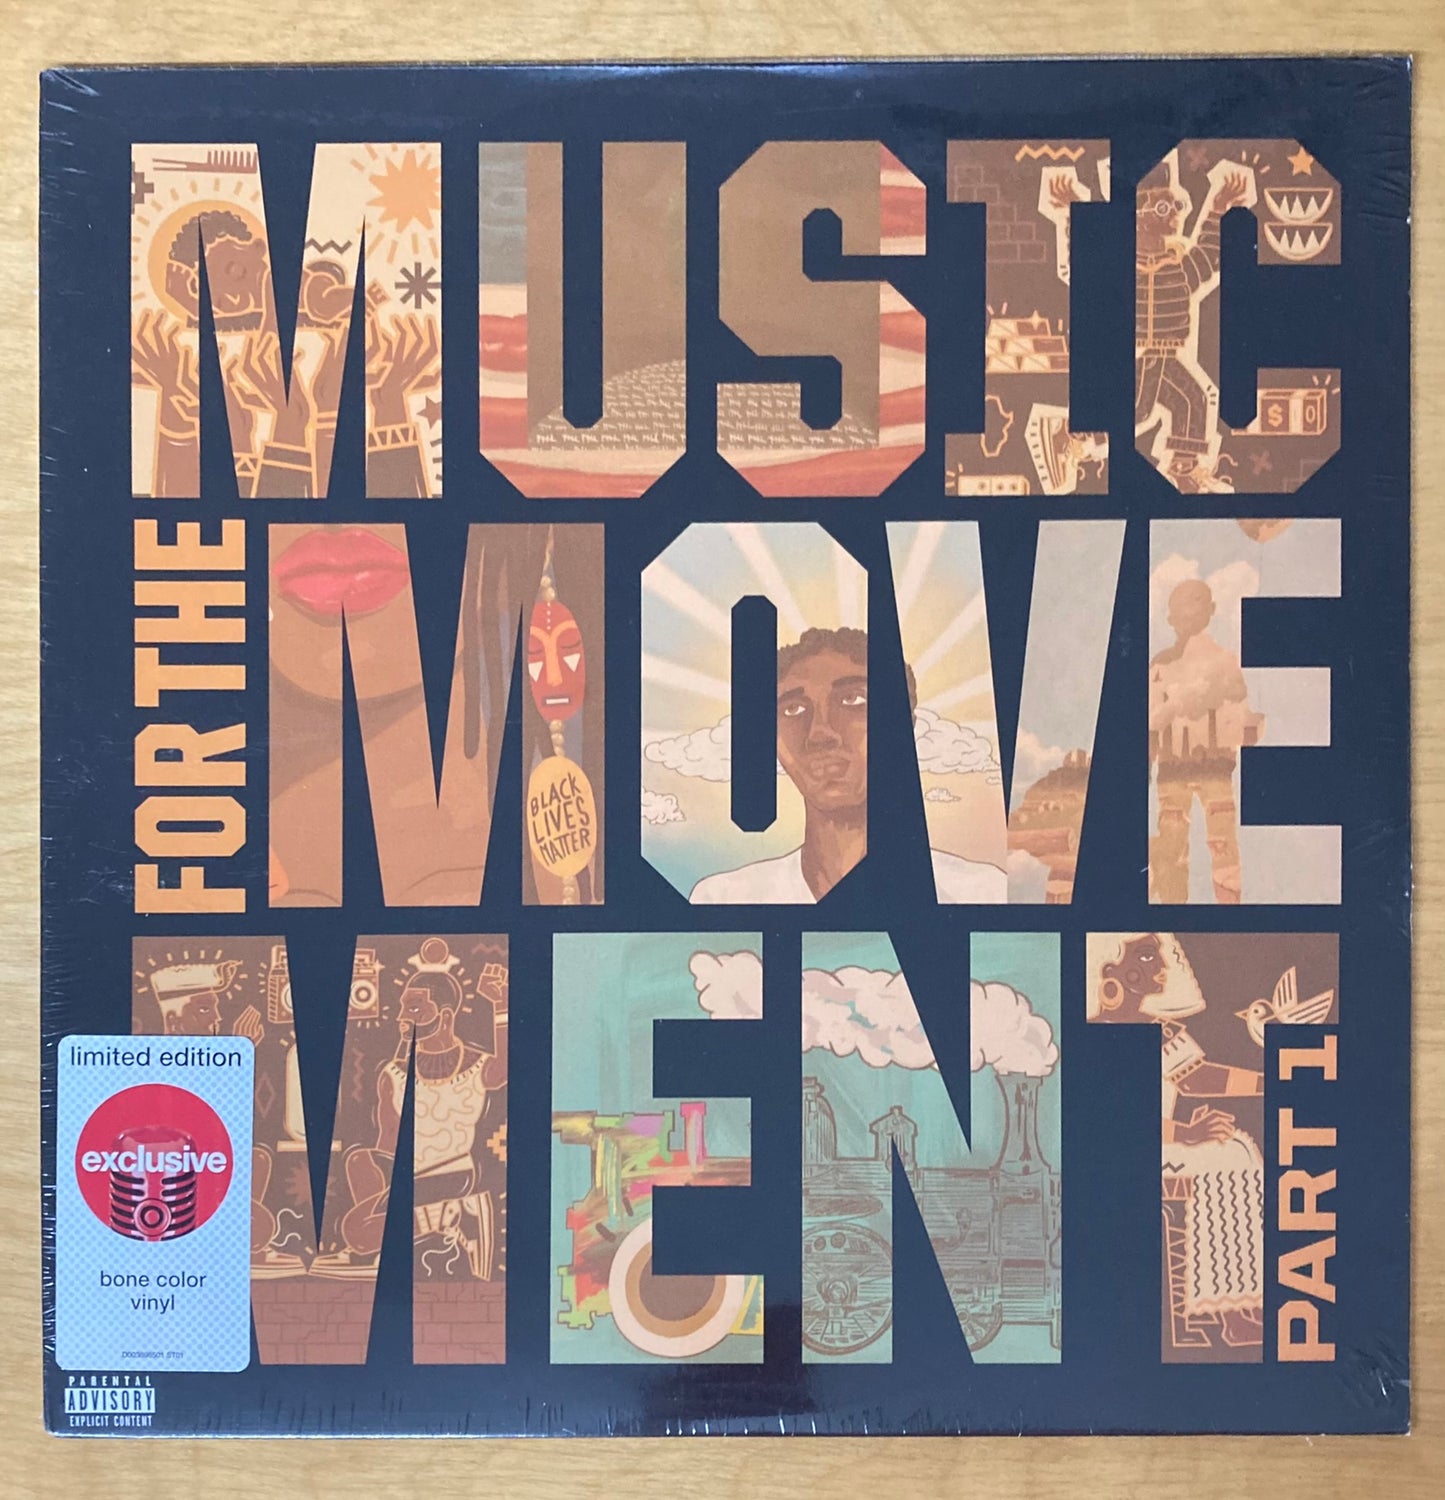 Music For The Movement Part 1 - Varios artistas *Vinilo color hueso sellado*